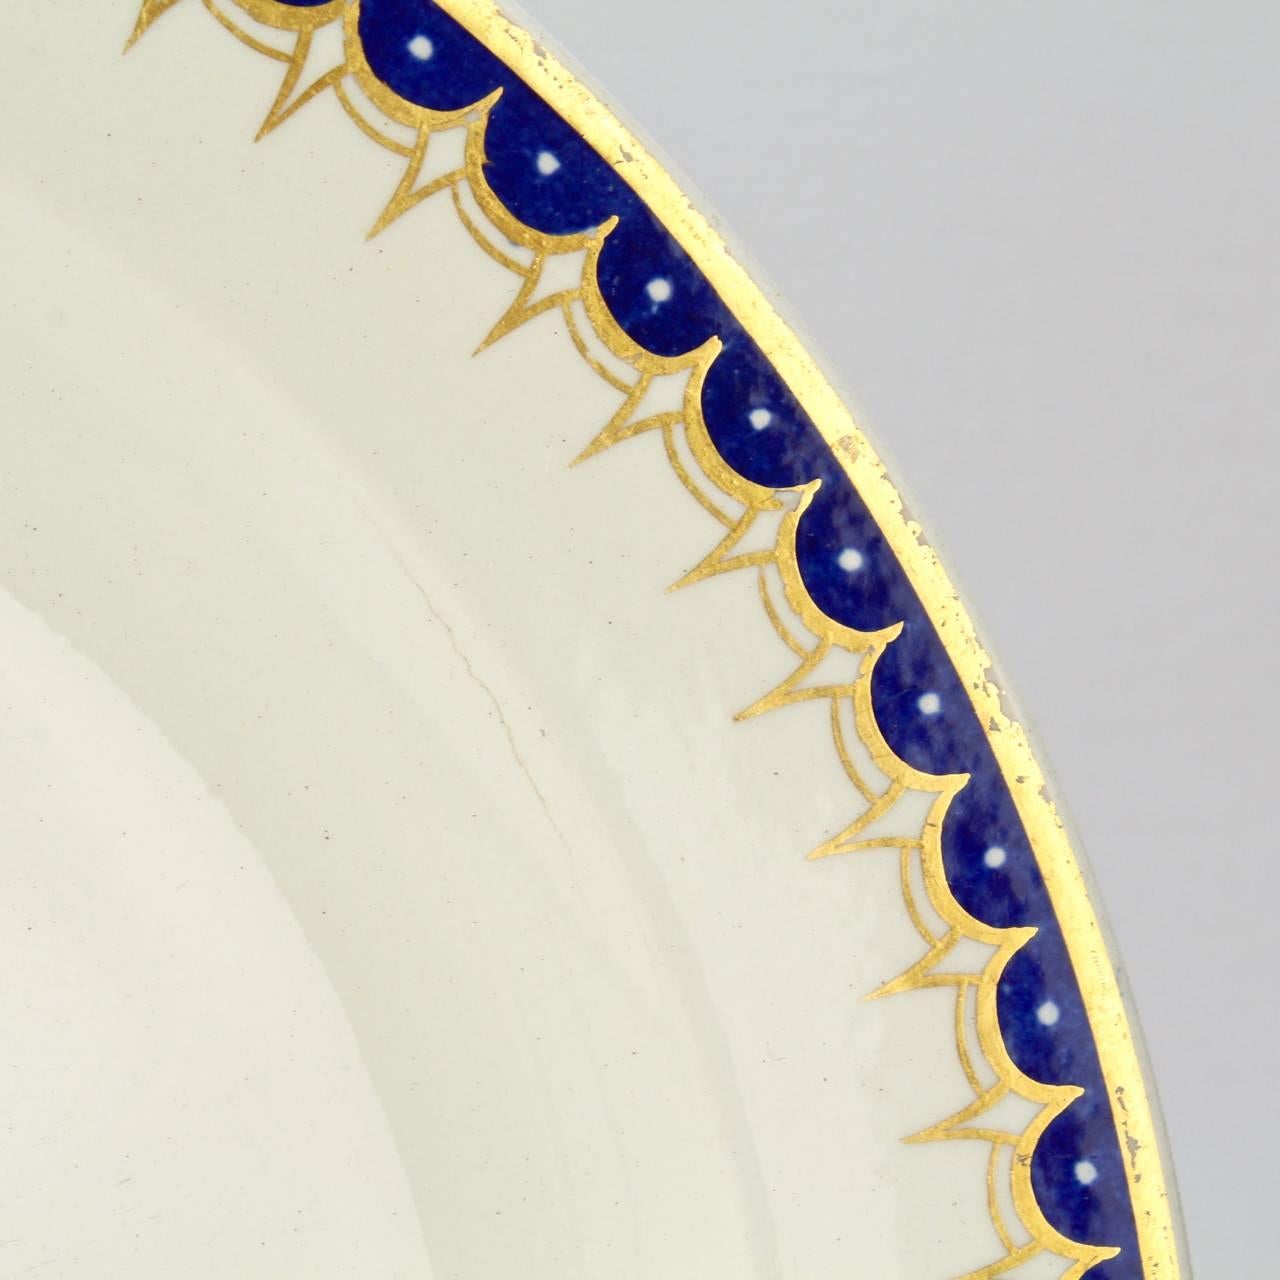 Set of Ten Early 19th Century Wedgwood Creamware Pattern No. 892 Dinner Plates 1